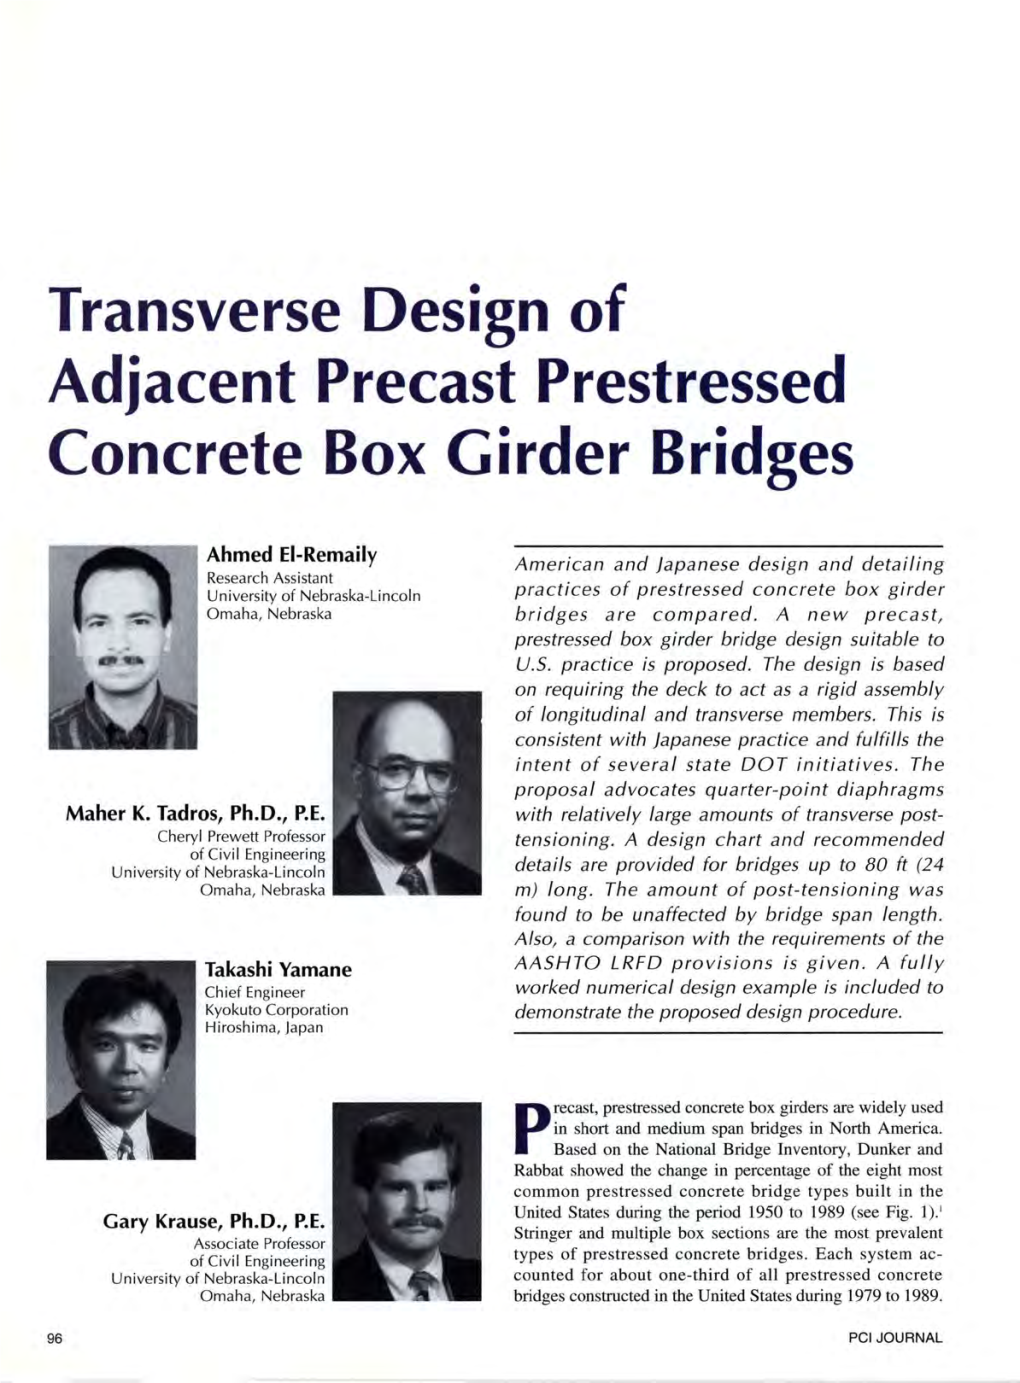 Transverse Design of Adjacent Precast Prestressed Concrete Box Girder Bridges